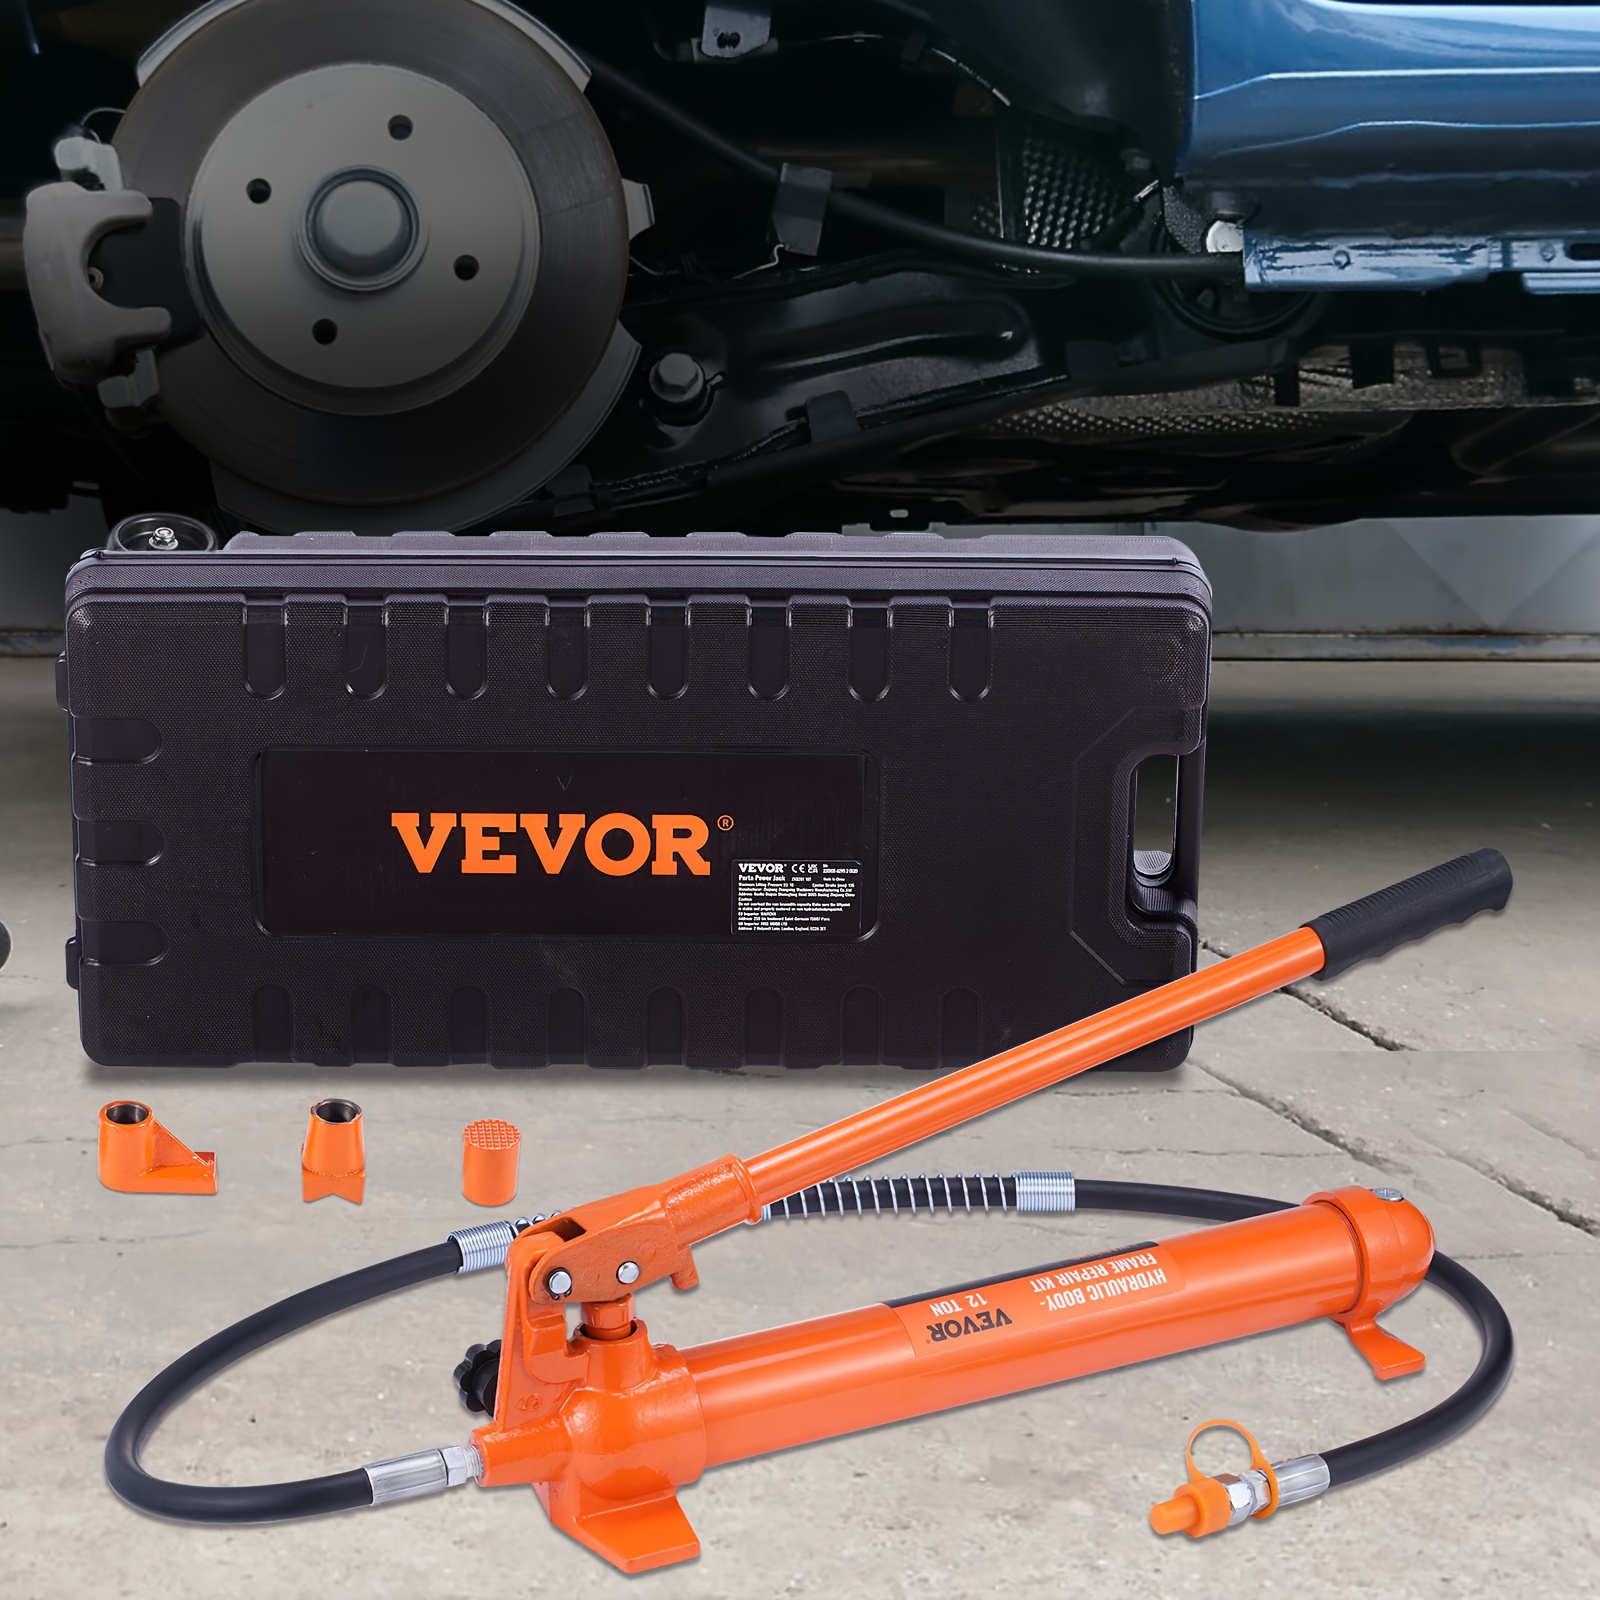 

Vevor 12 Ton Porta Power Kit, Hydraulic Ram With Pump With 4.6 Ft/1.4 M Oil Hose, Portable Hydraulic Jack With Storage Case For Automotive, Garage, Farm, Mechanic (26455 Lbs)